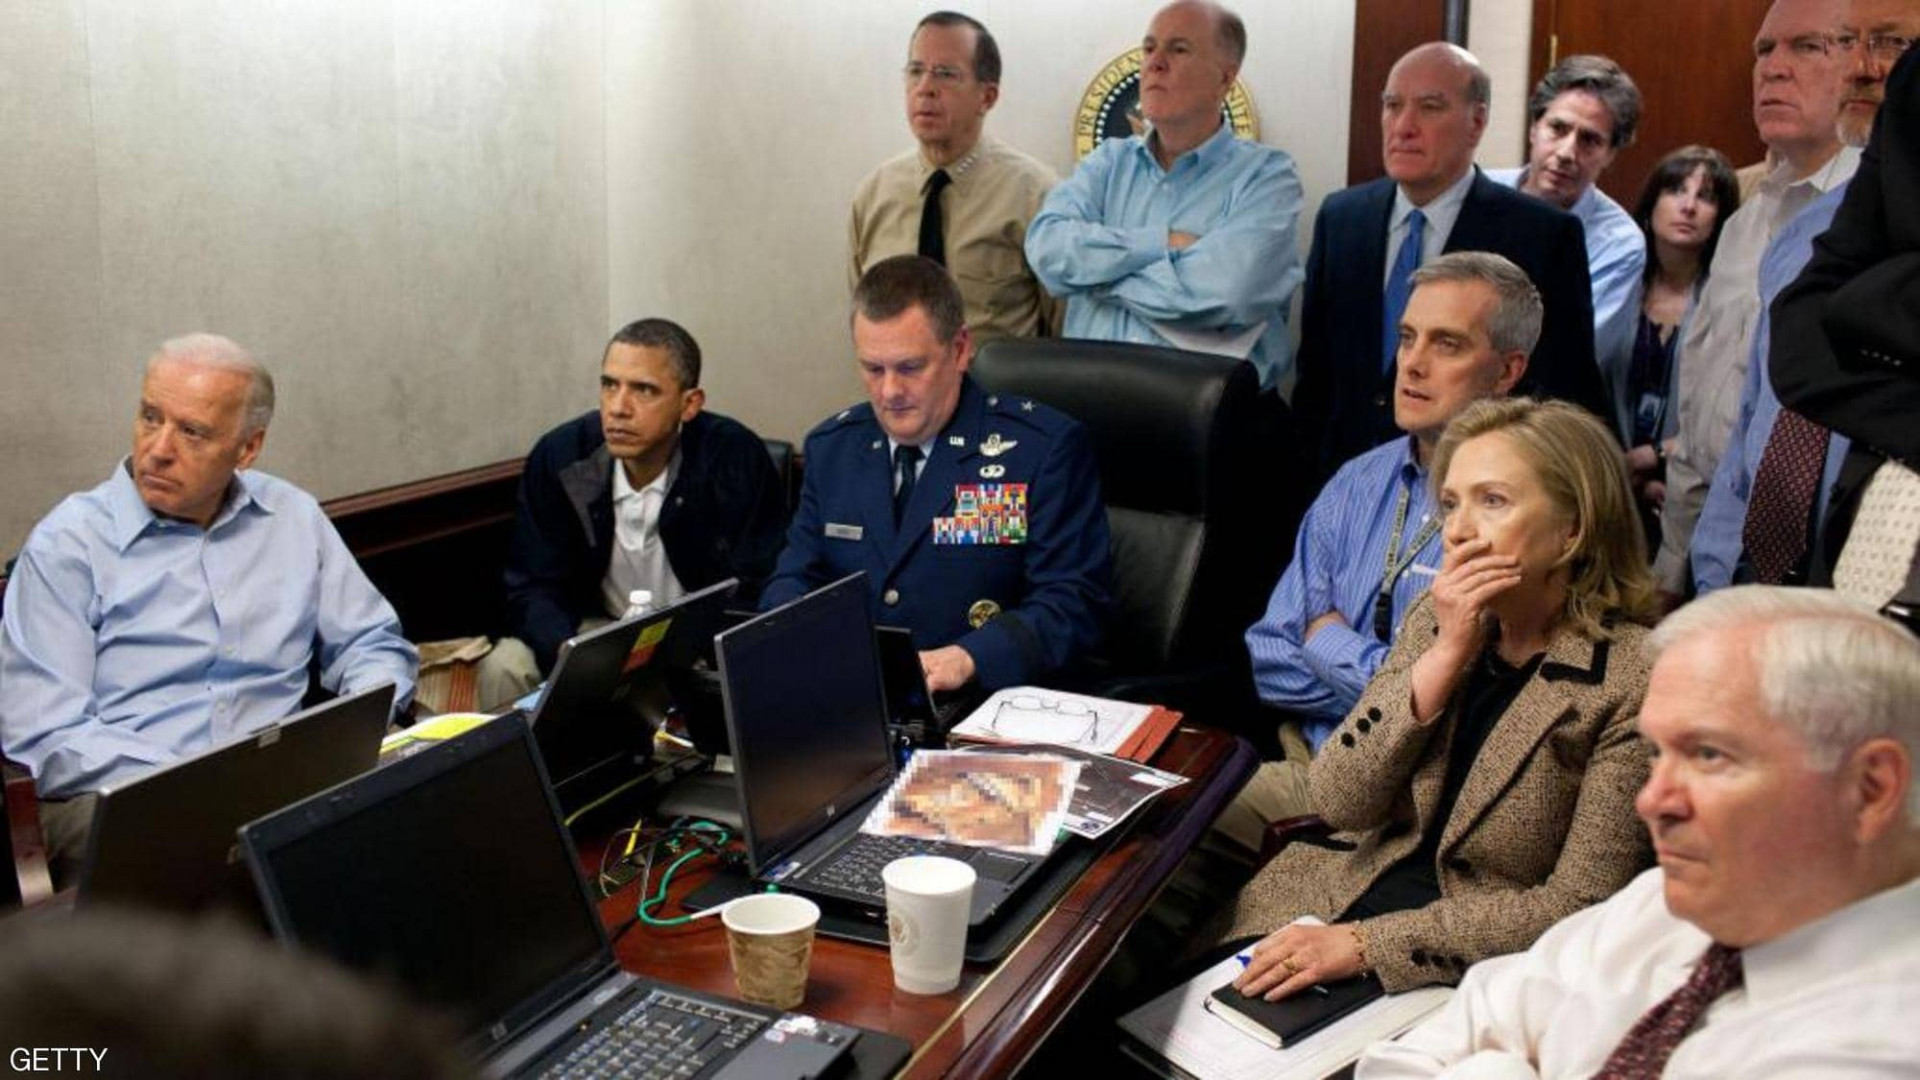 Joe Biden advised against Bin Laden raid